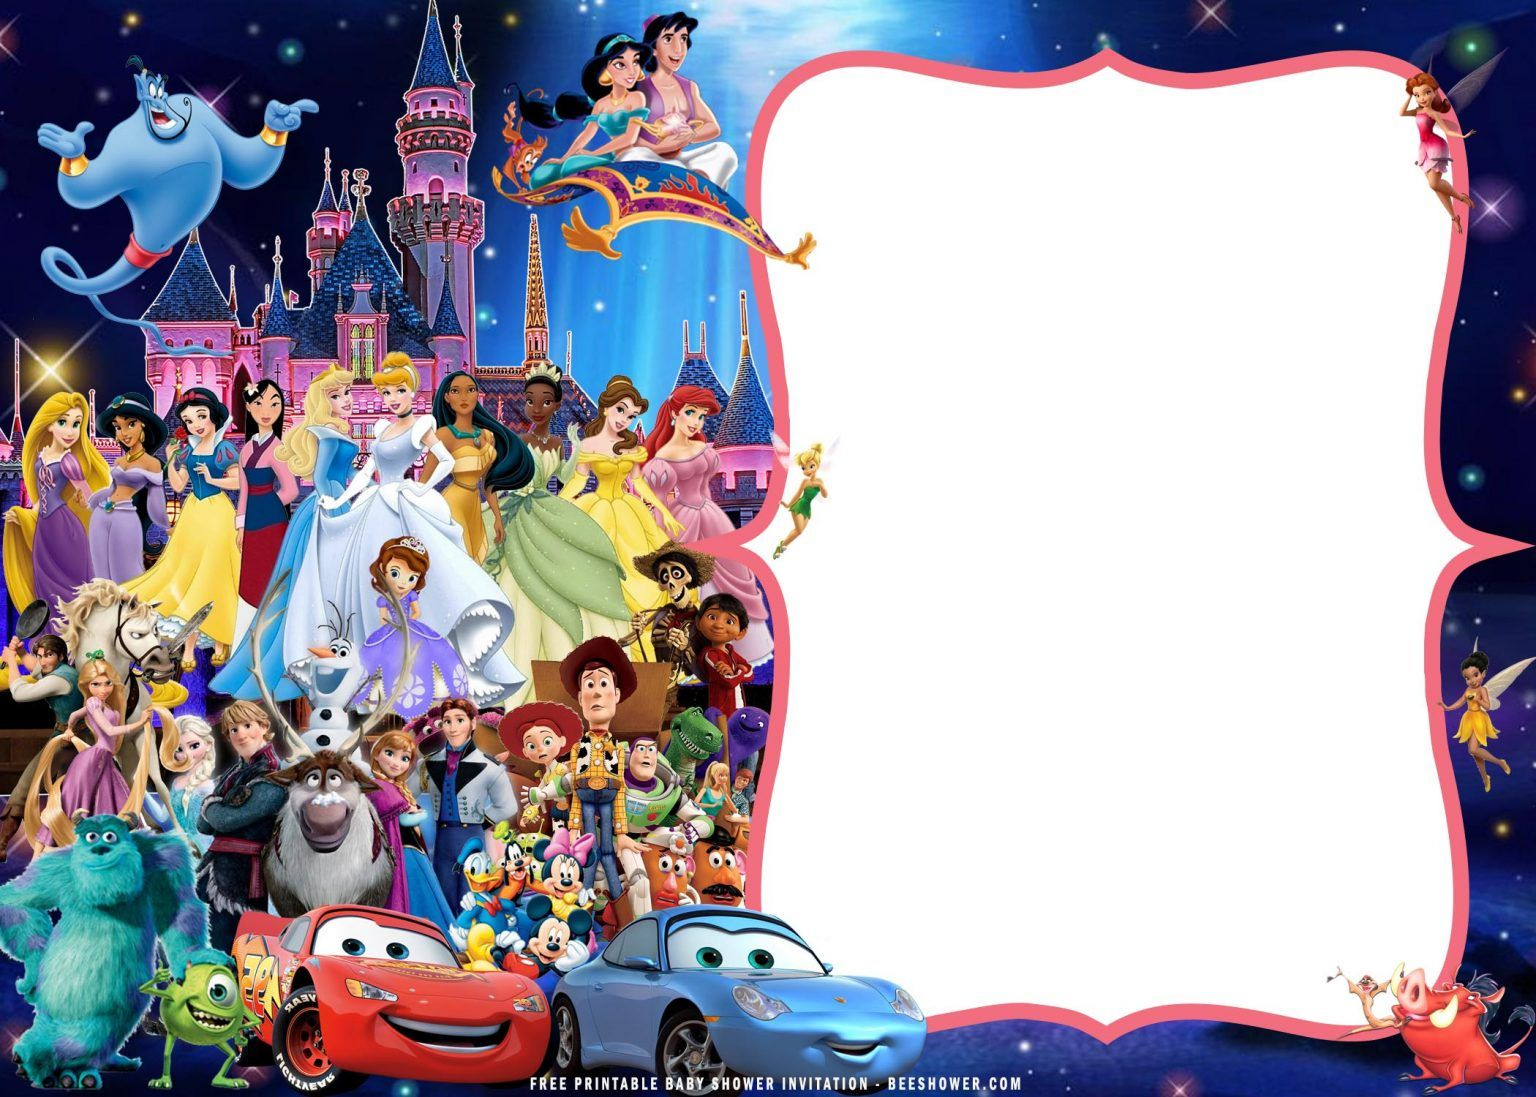 Free Printable) - Disney Castle Invitation Templates | Beeshower in Free Printable Disney Invitations